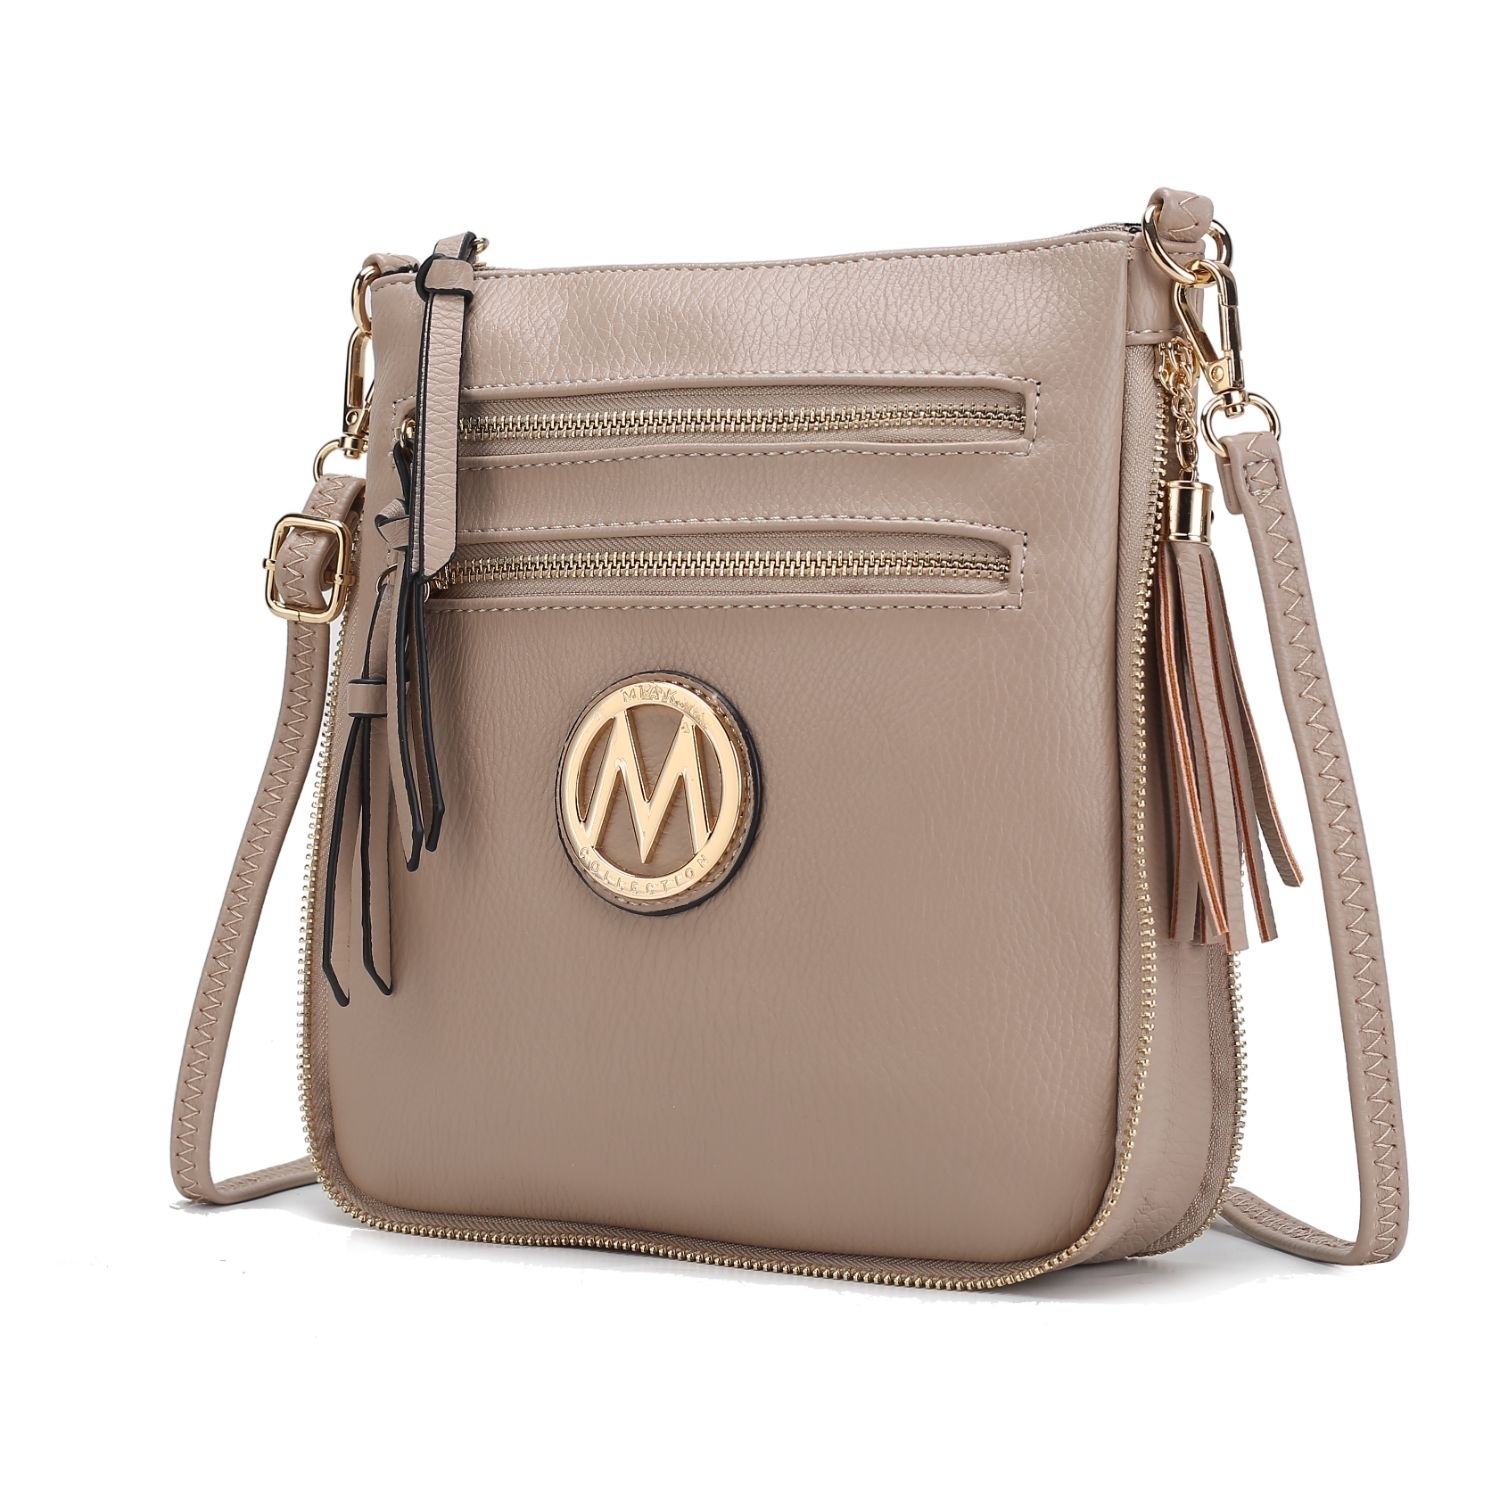 MKF Collection Angelina Vegan Leather Crossbody Handbag By Mia K. - White